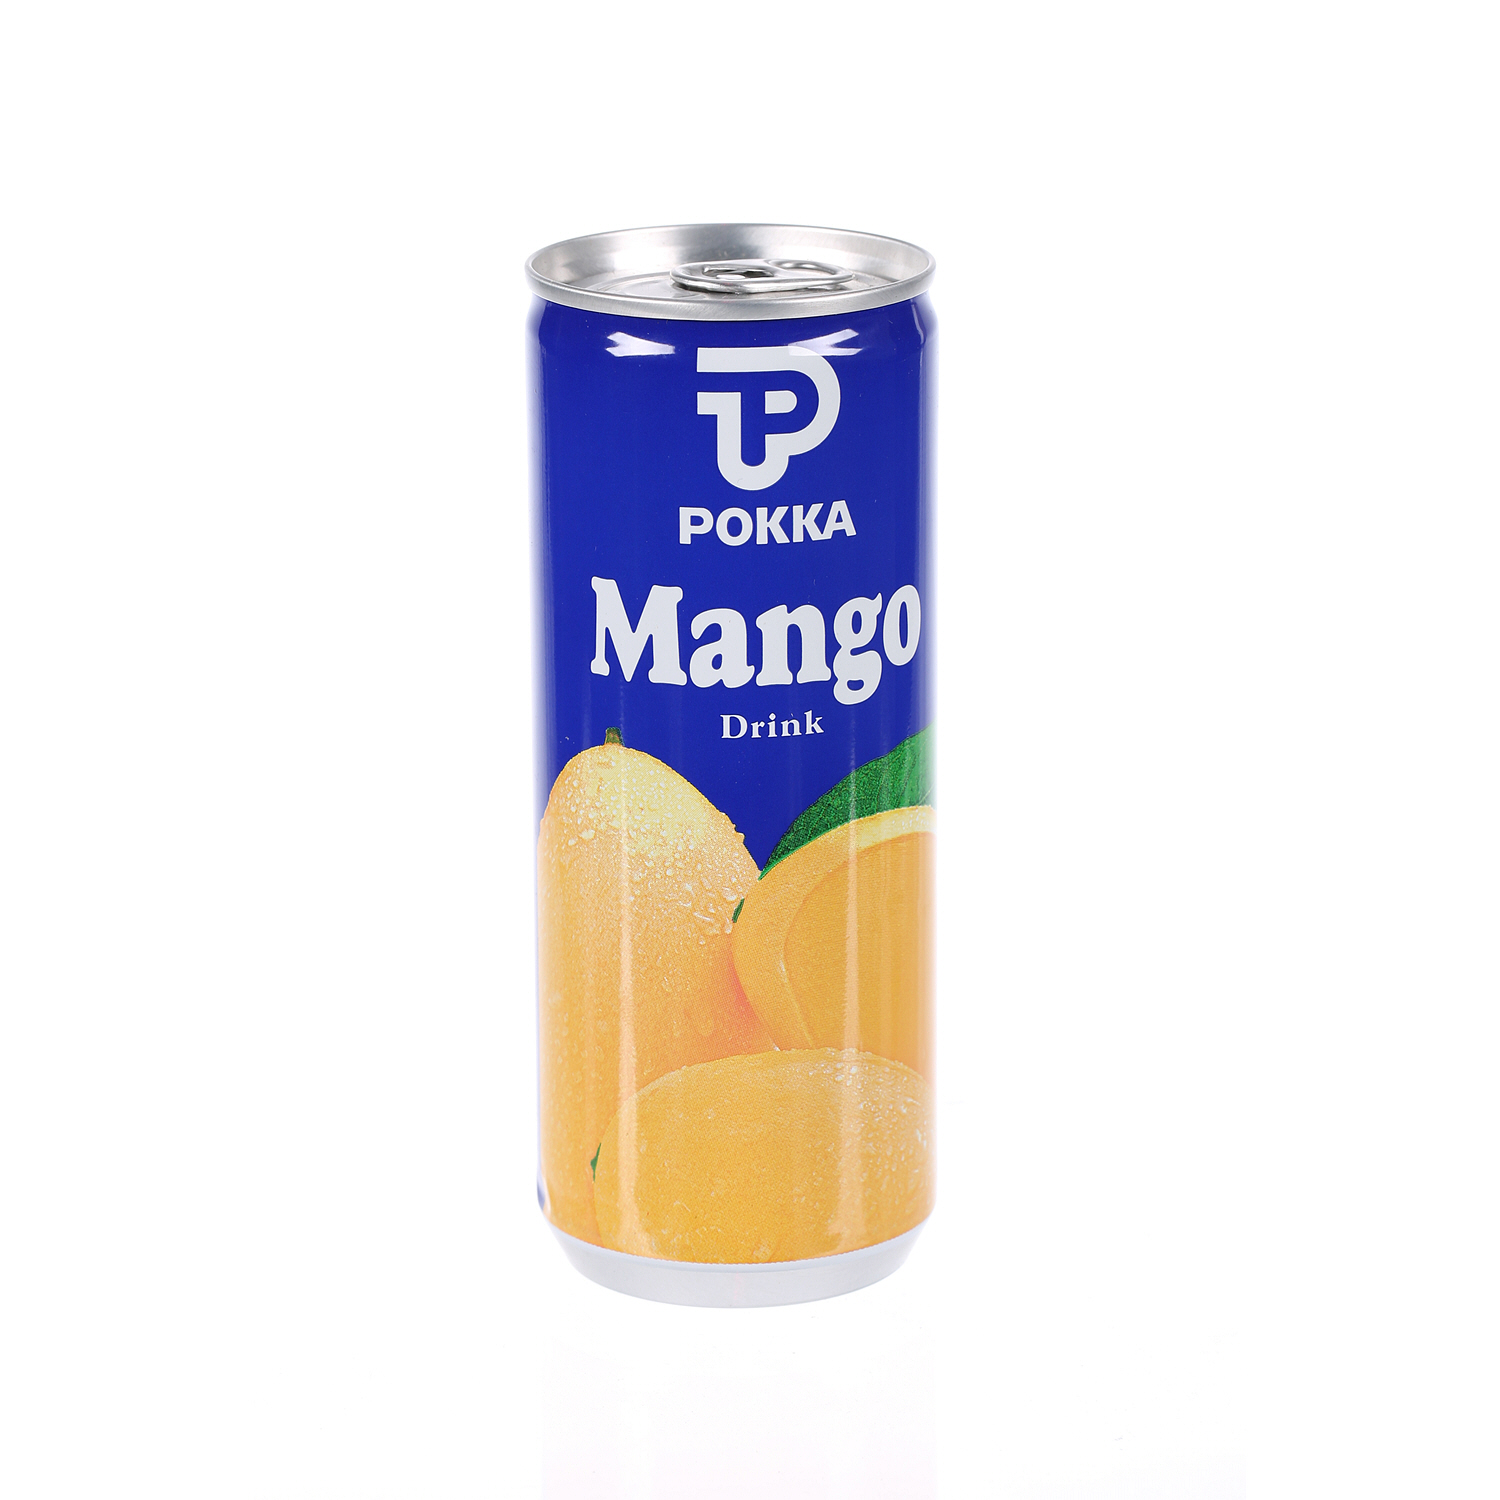 بوكا مشروب مانجو 240 مل